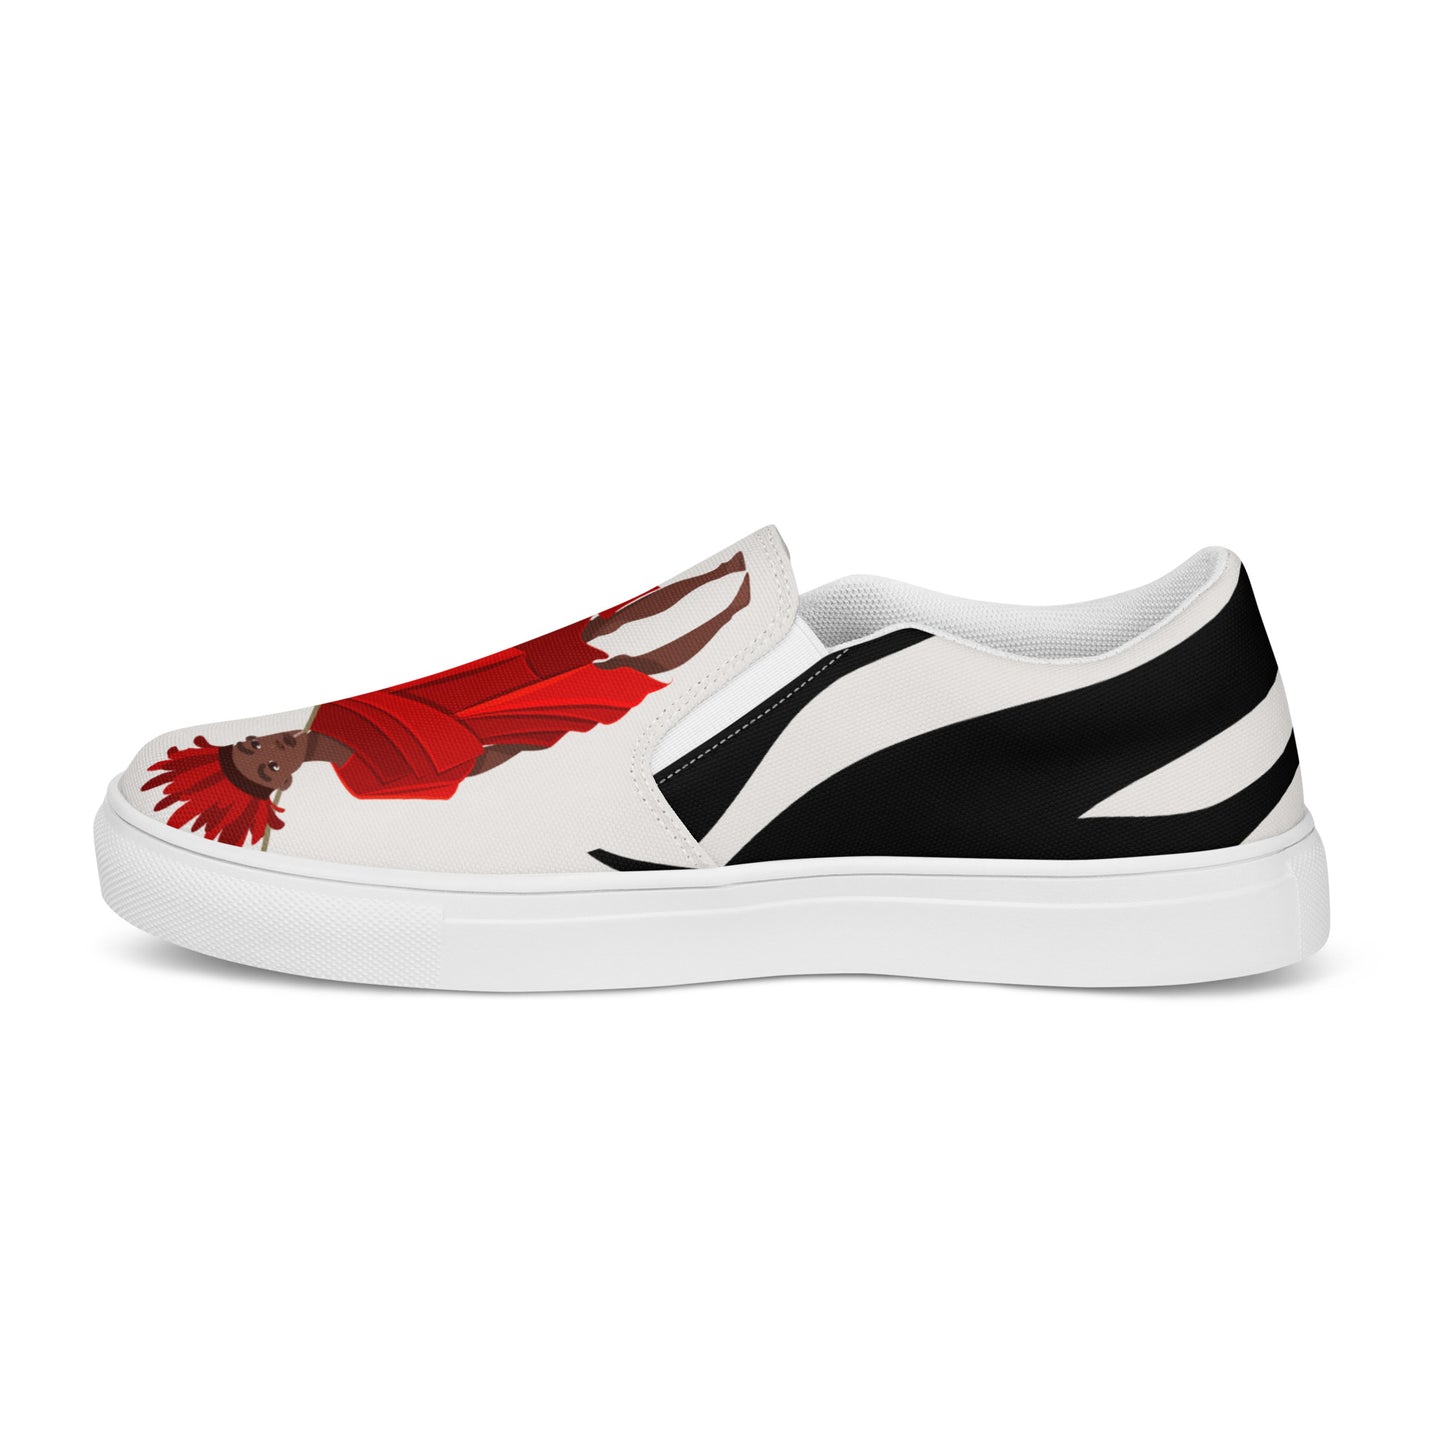 Agojie Zebra Print Women’s Slip-On Canvas Shoes